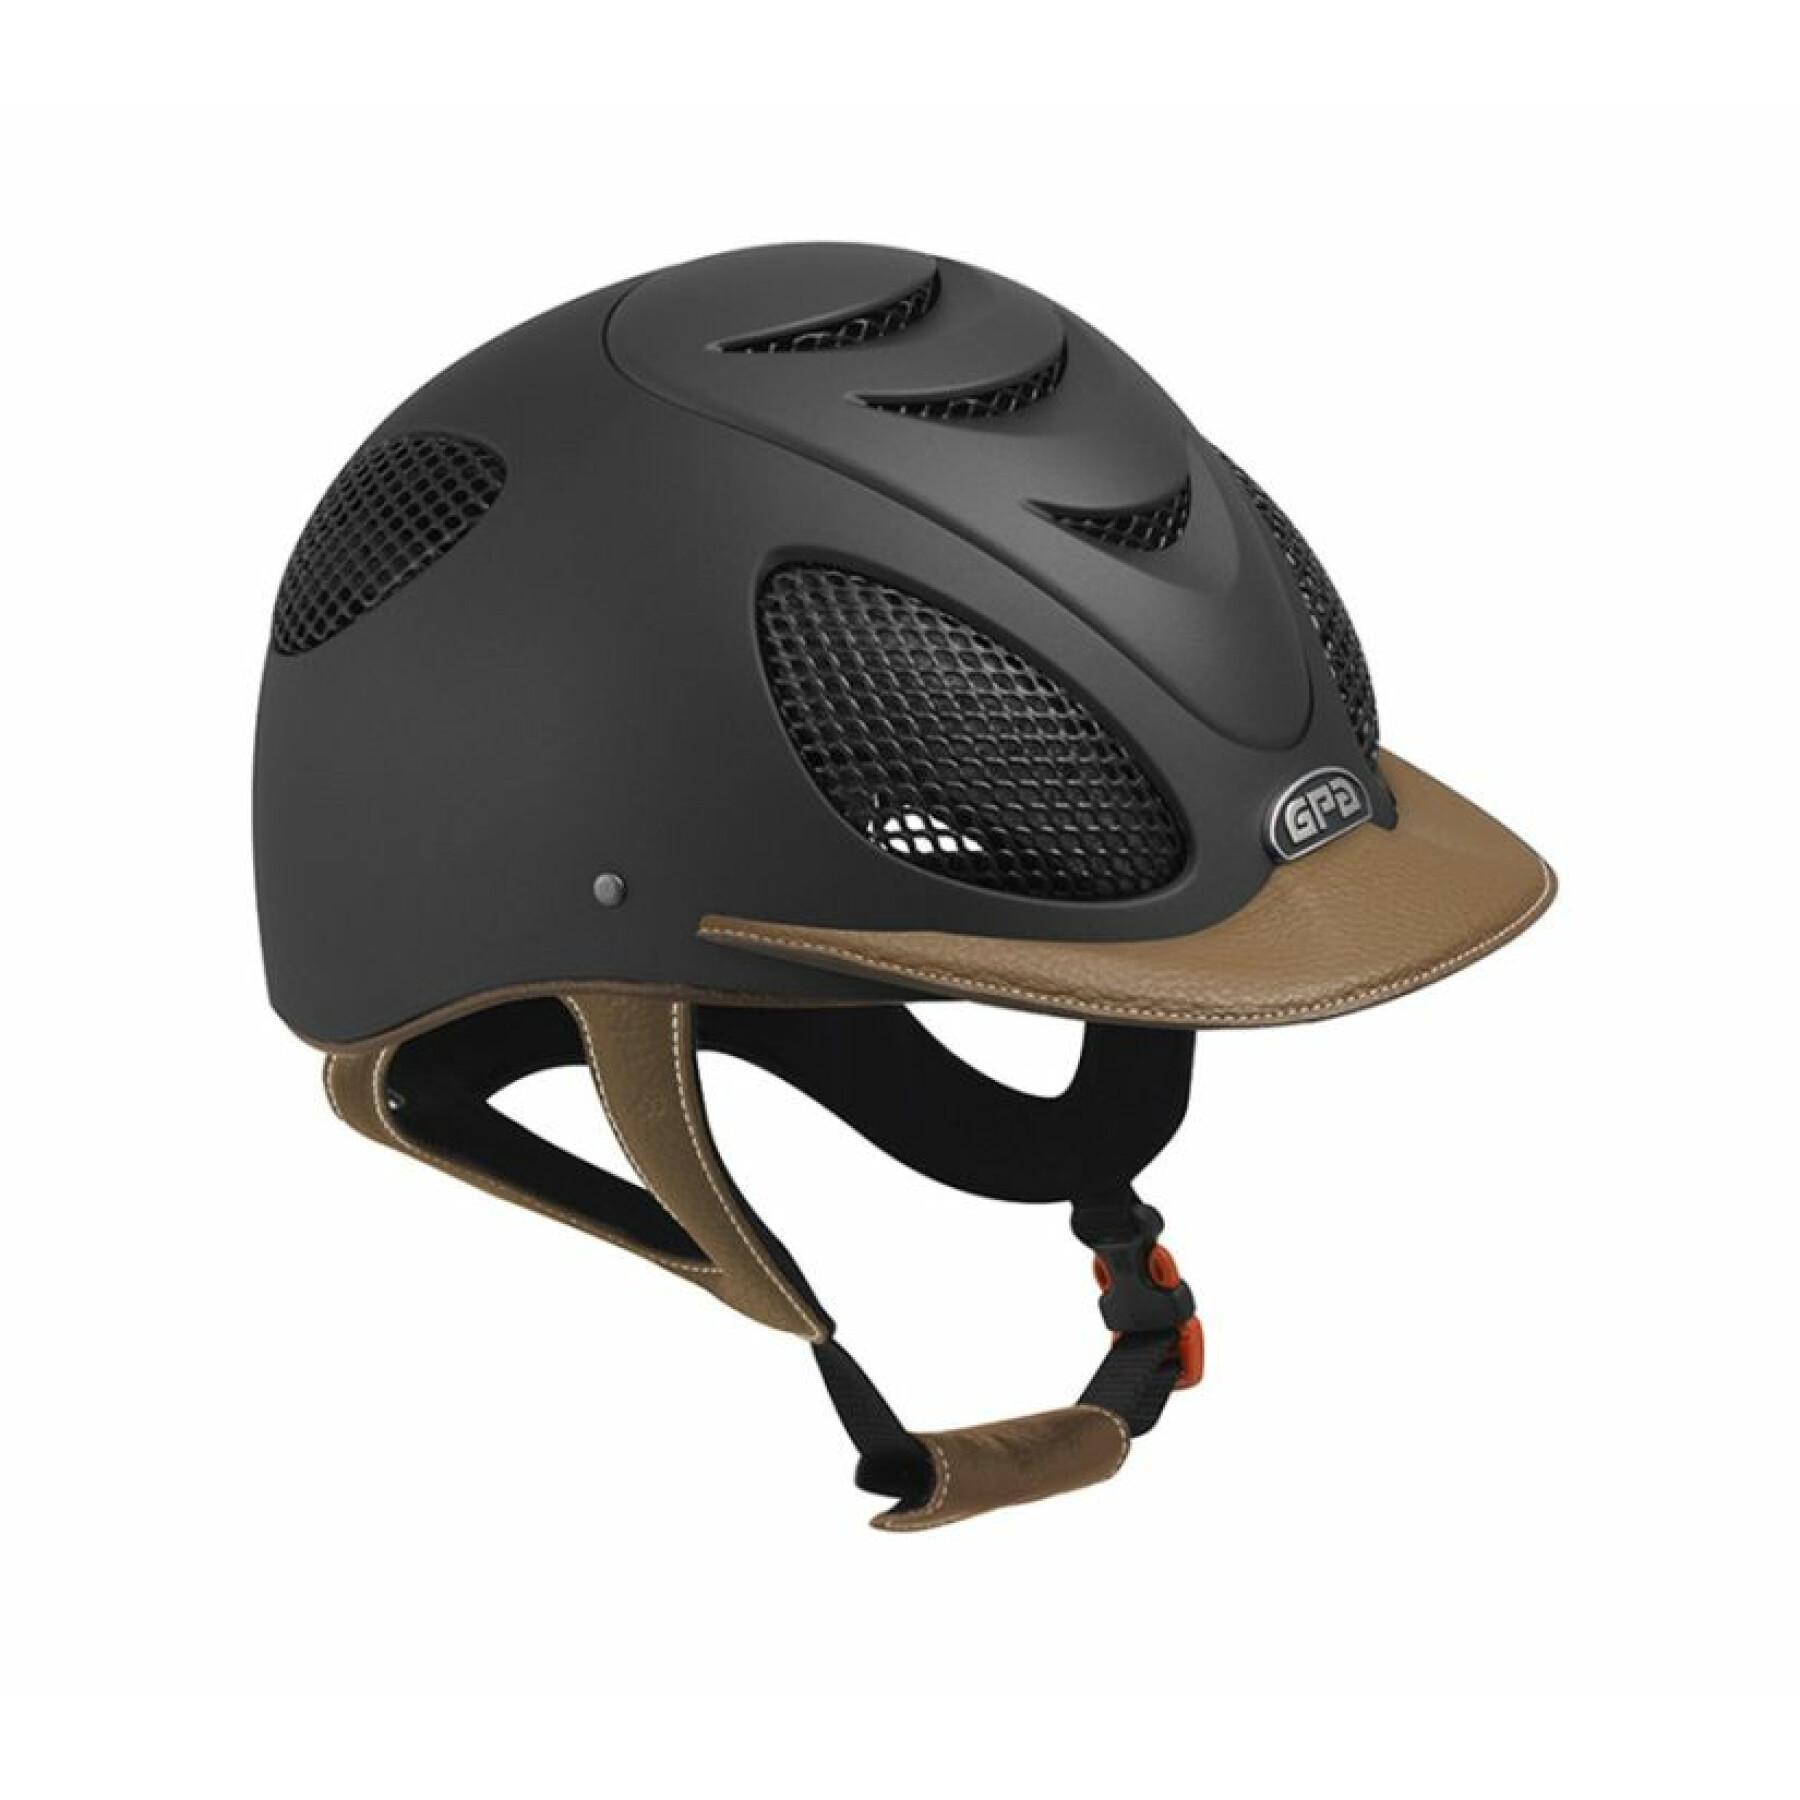 Leather riding helmet GPA Speed'Air 2X